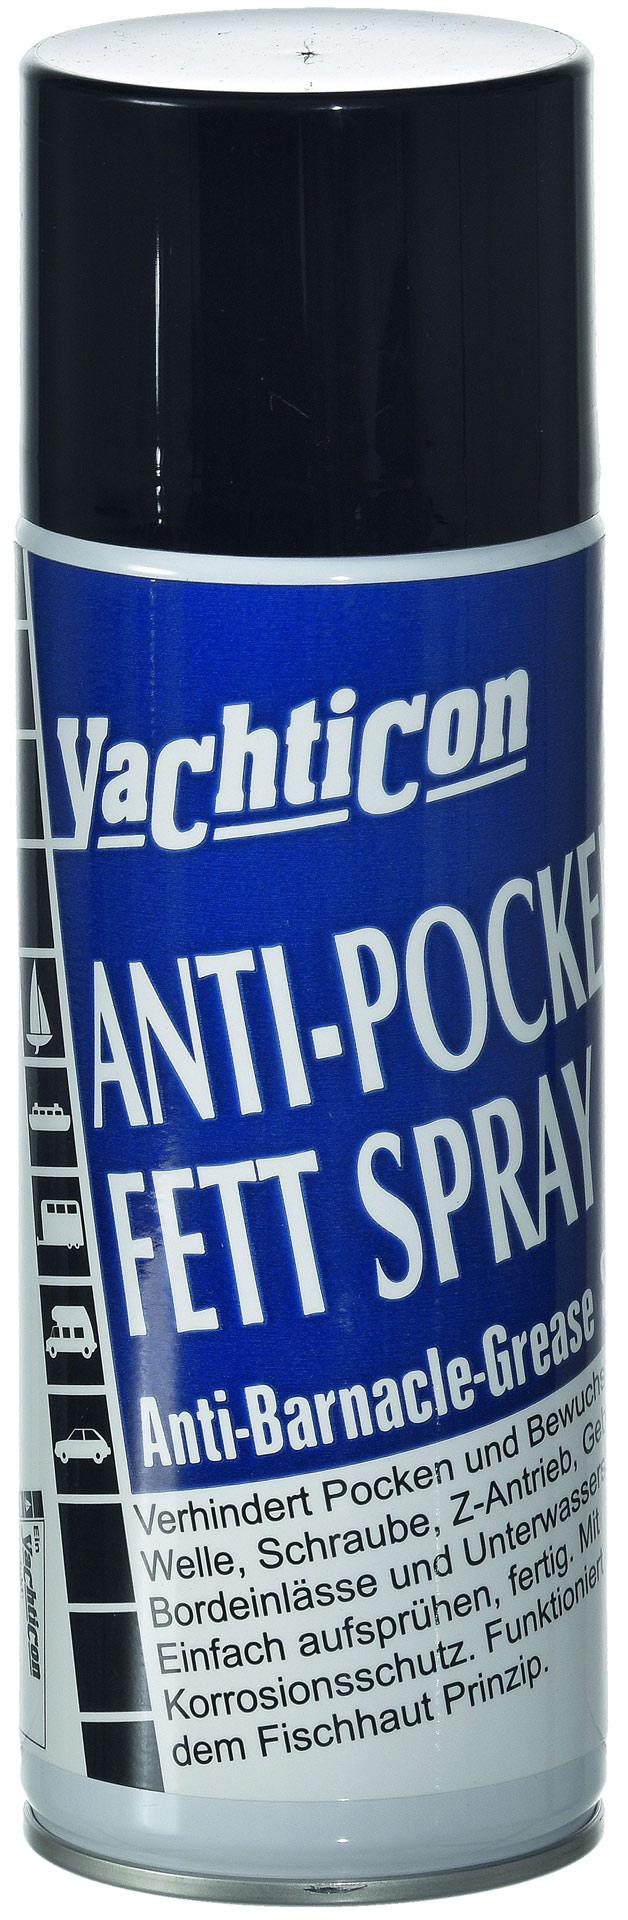 yachticon anti pocken fett spray